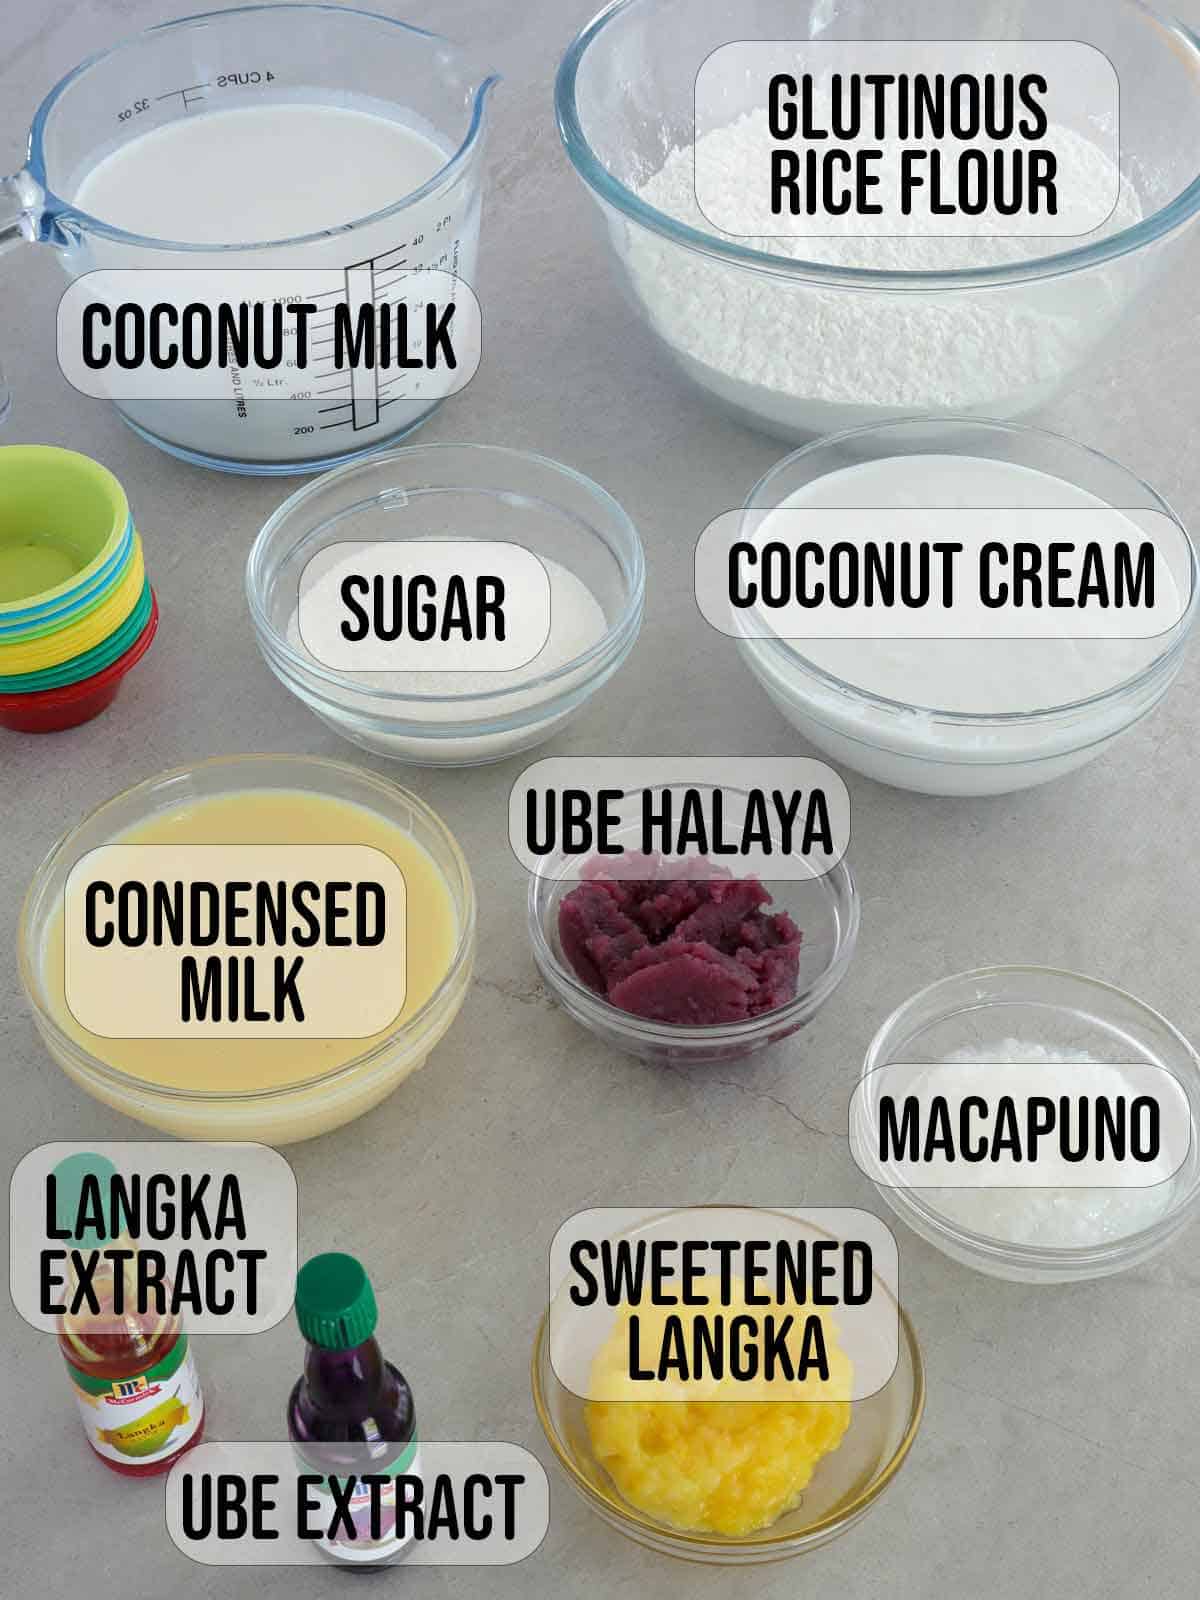 coconut cream, coconut milk, glutinous rice flour, sugar, sweetened jackfruit, ube halaya, macapuno, condensed milk, langka extract, ube extract.